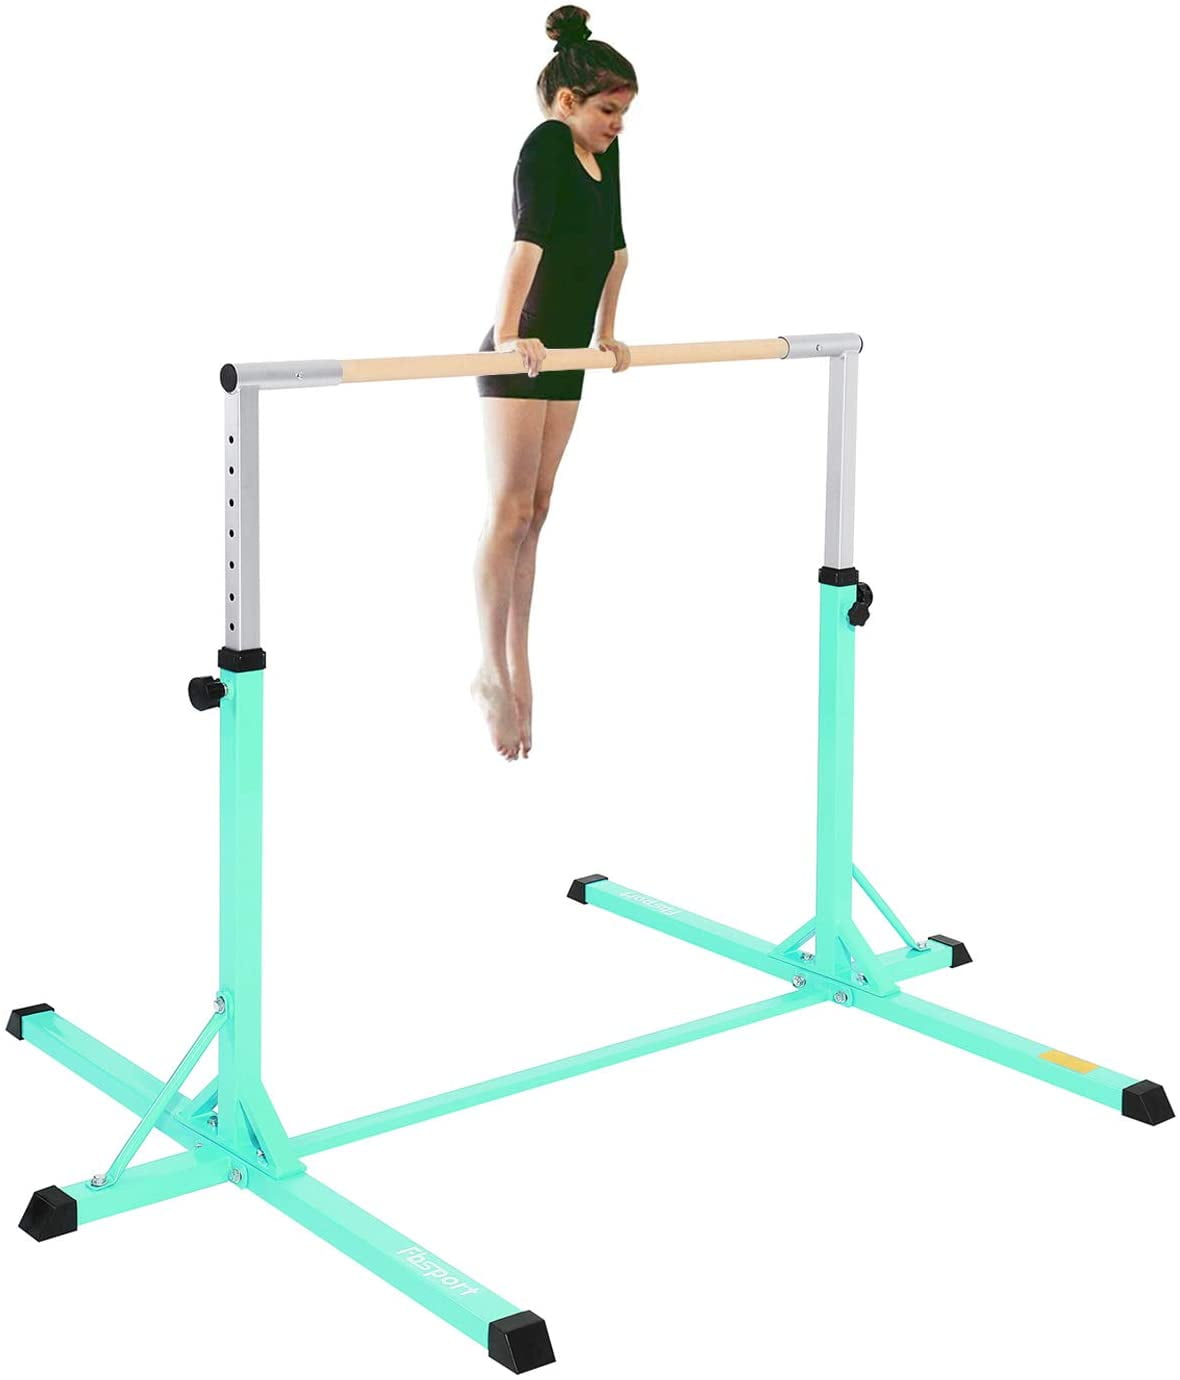 Gymnastics Bars for Kids Adjustable Horizontal Bar Junior Training Bars for Home 